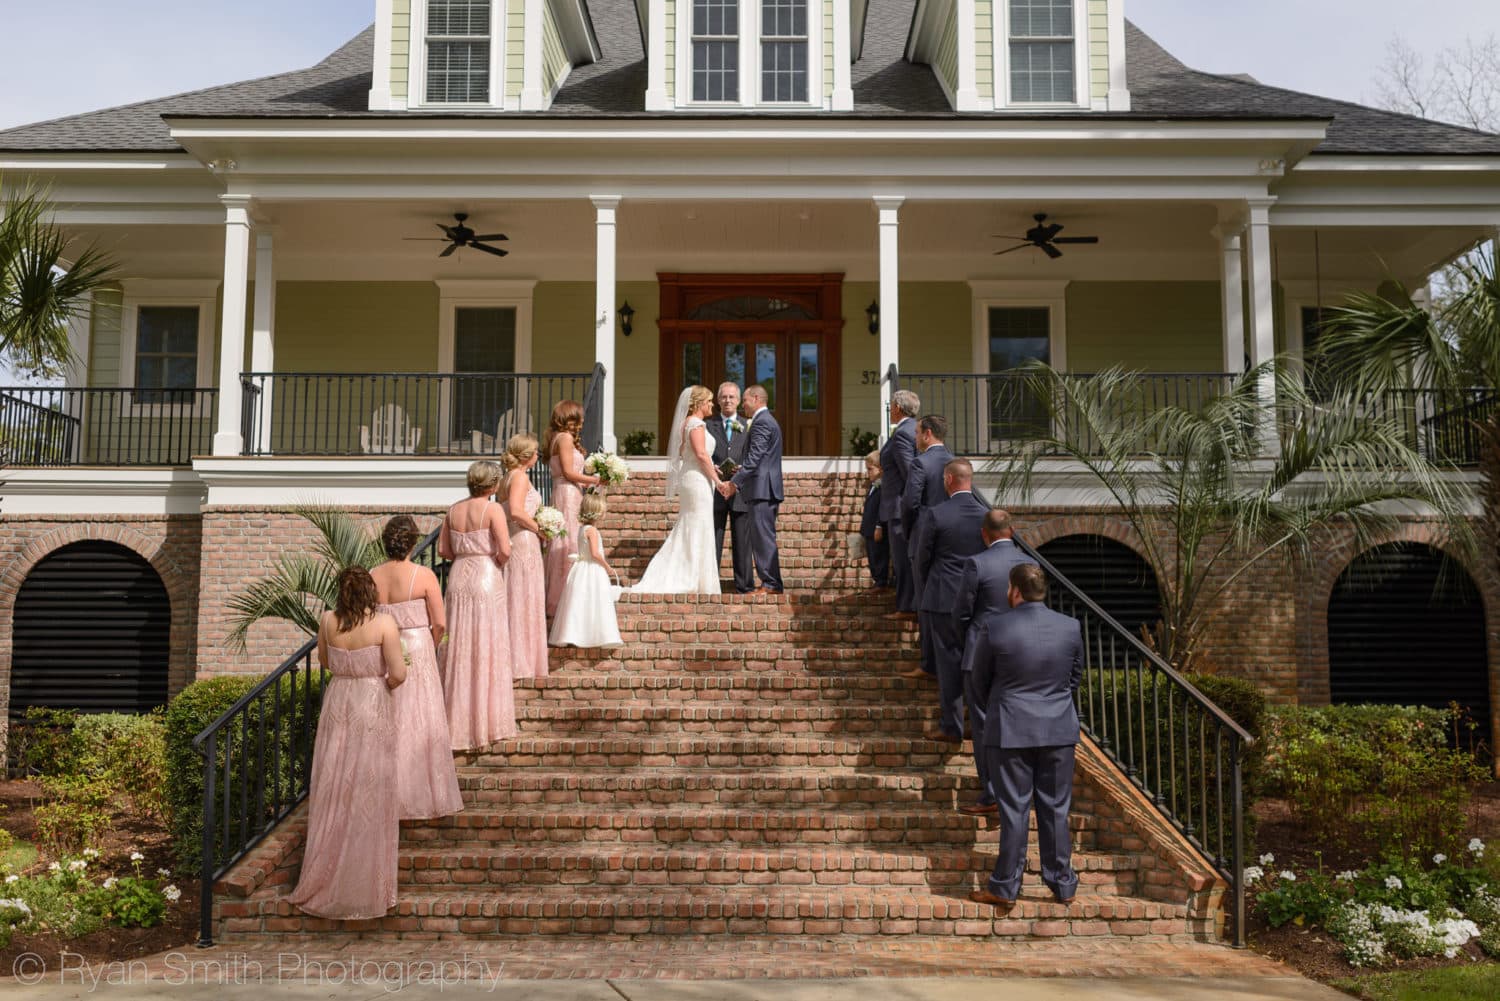 Wedding ceremony on the front steps - Pawleys Plantation